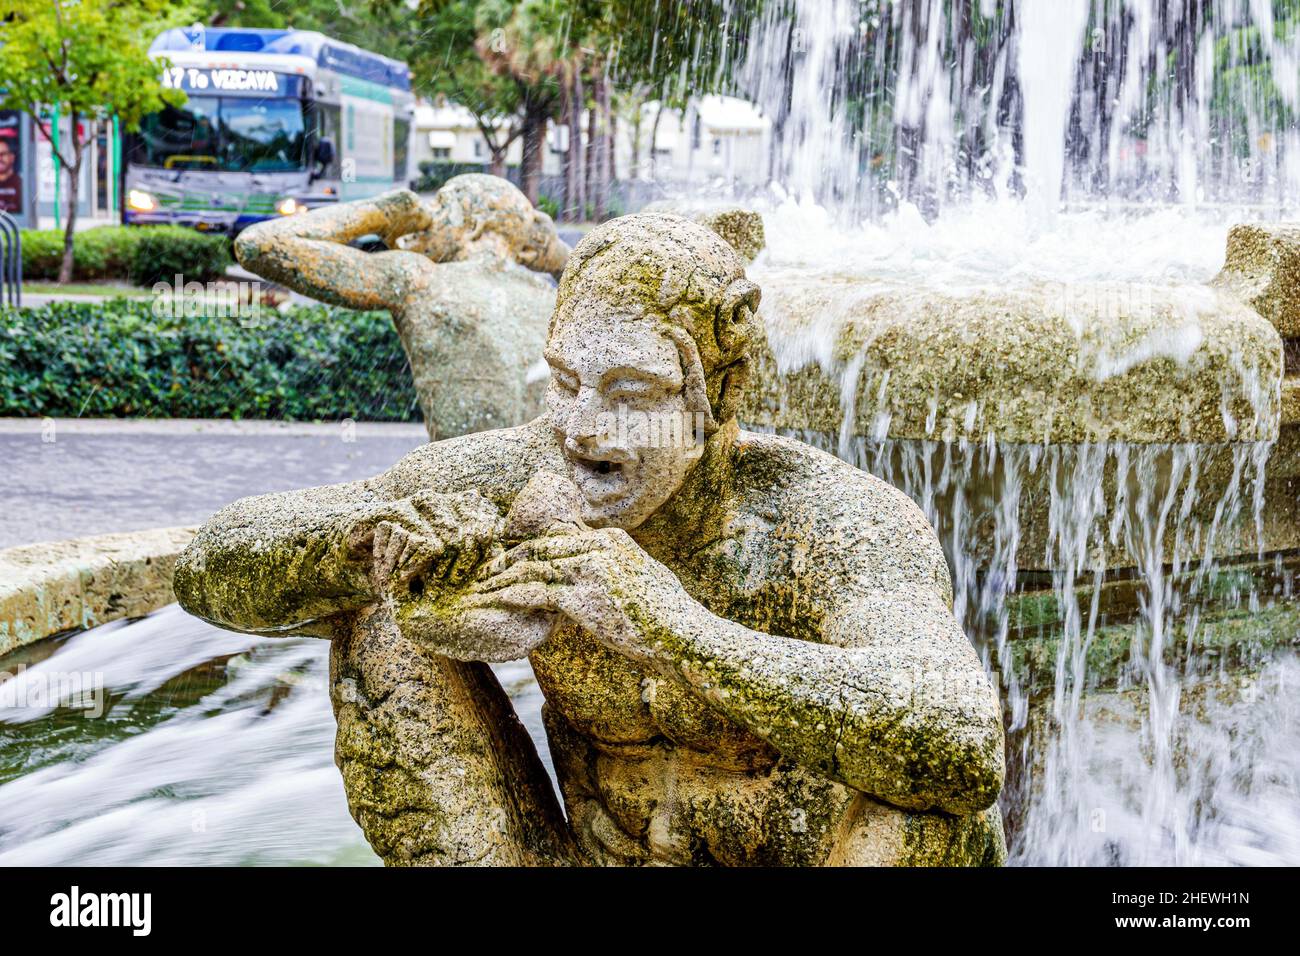 Miami Florida Vizcaya Metrorail Train Station fountain water sculpture statue mermaid 'Delights and Terrors from the Sea' art artwork Stock Photo